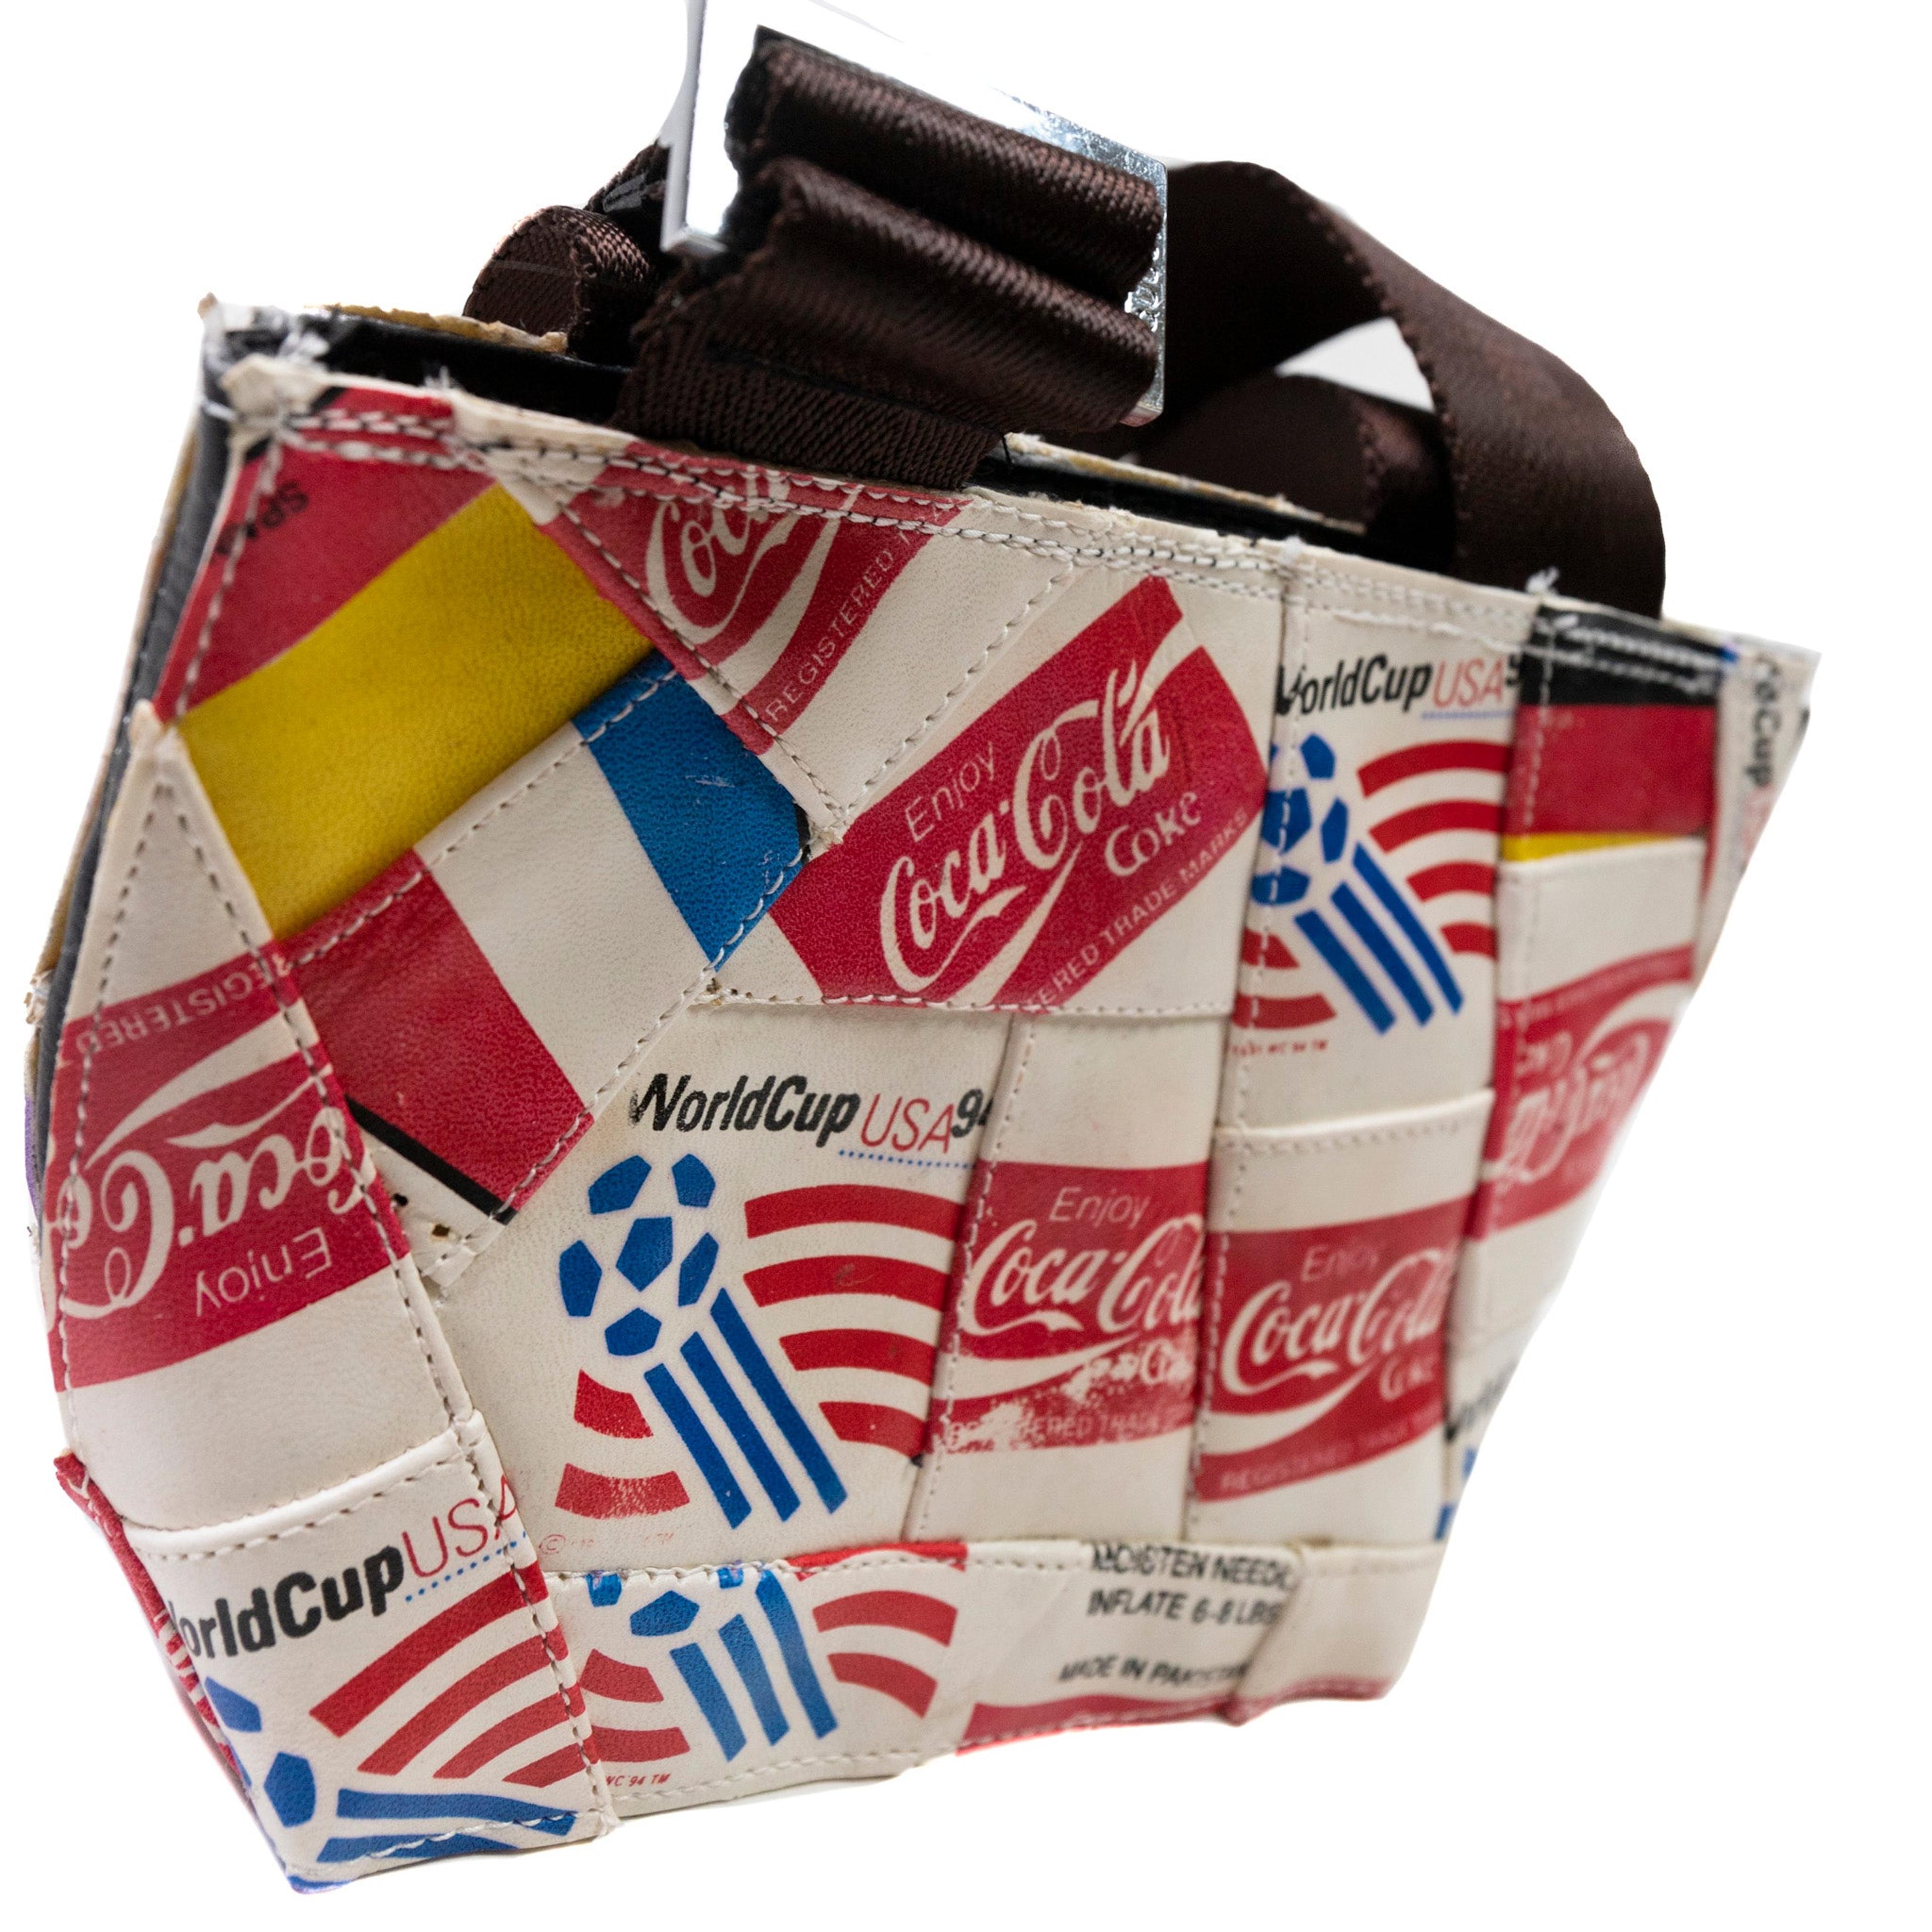 Alternate View 10 of VT Rework: The USA '94 x Coca Cola Reworked Handbag